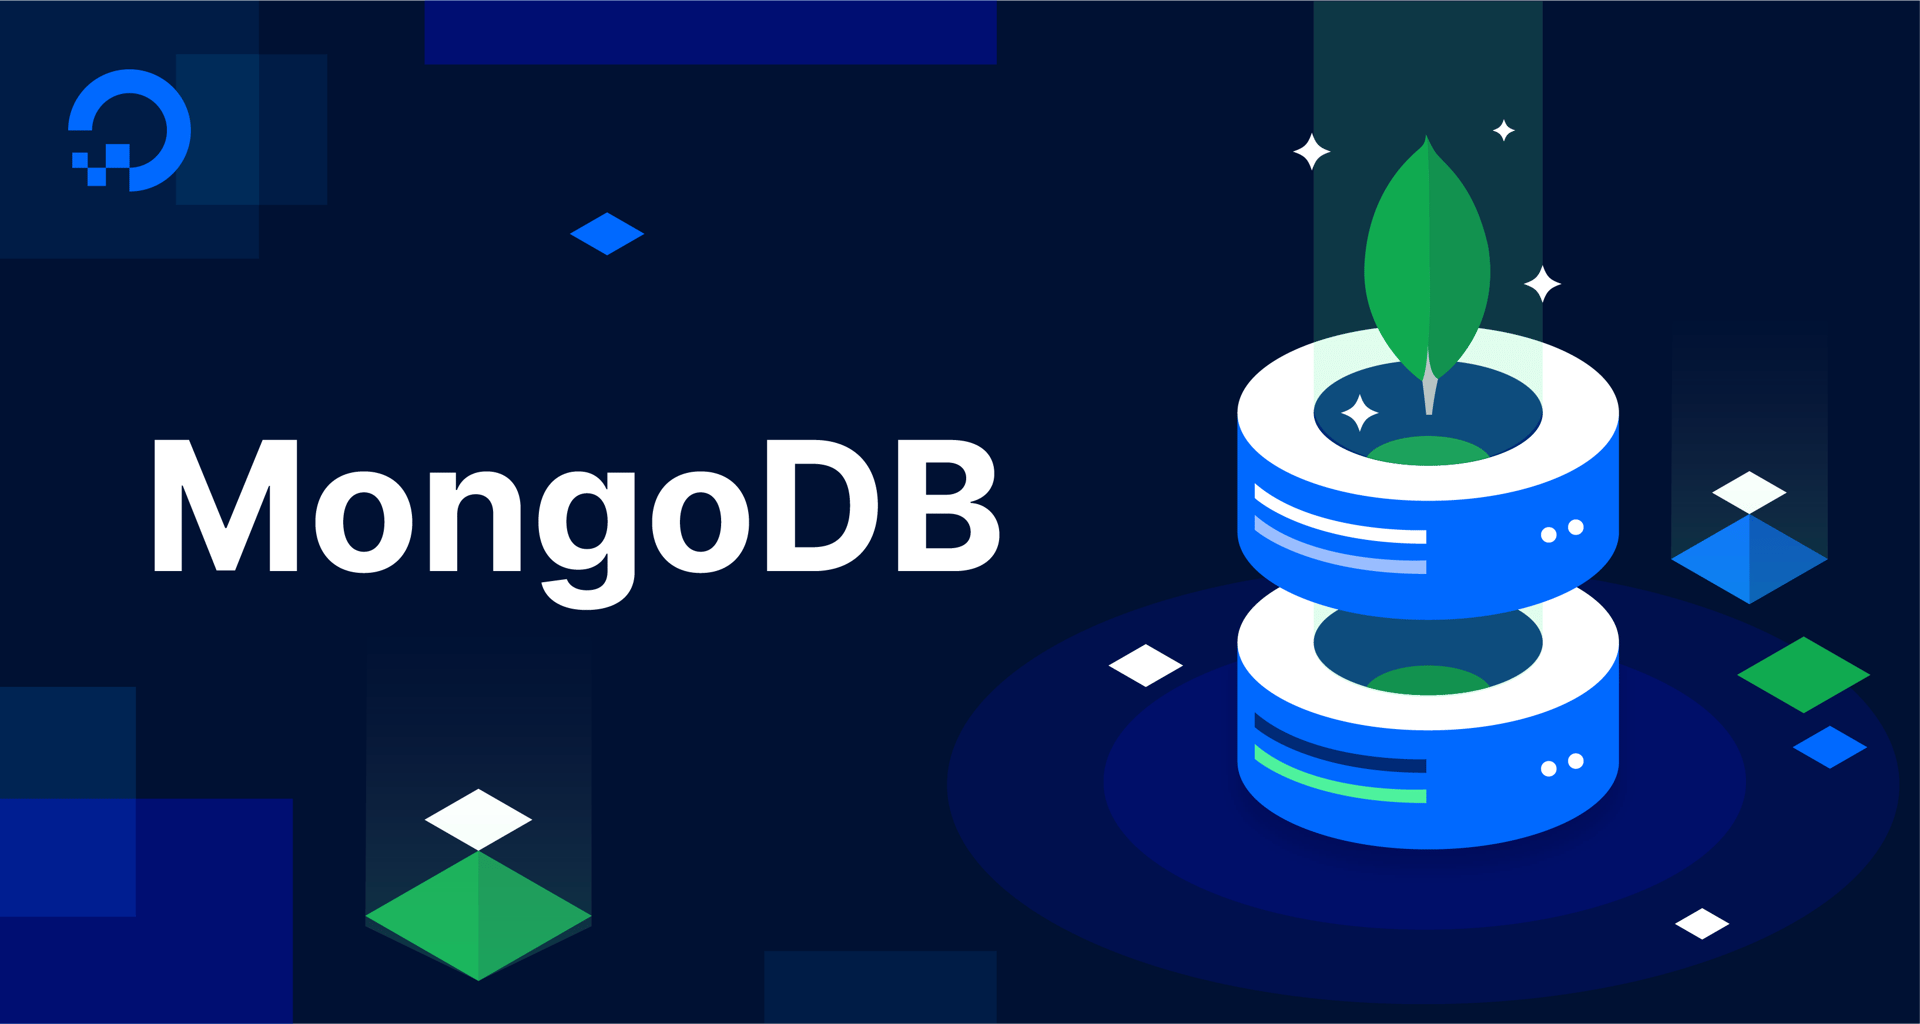 How To Use the MongoDB Shell